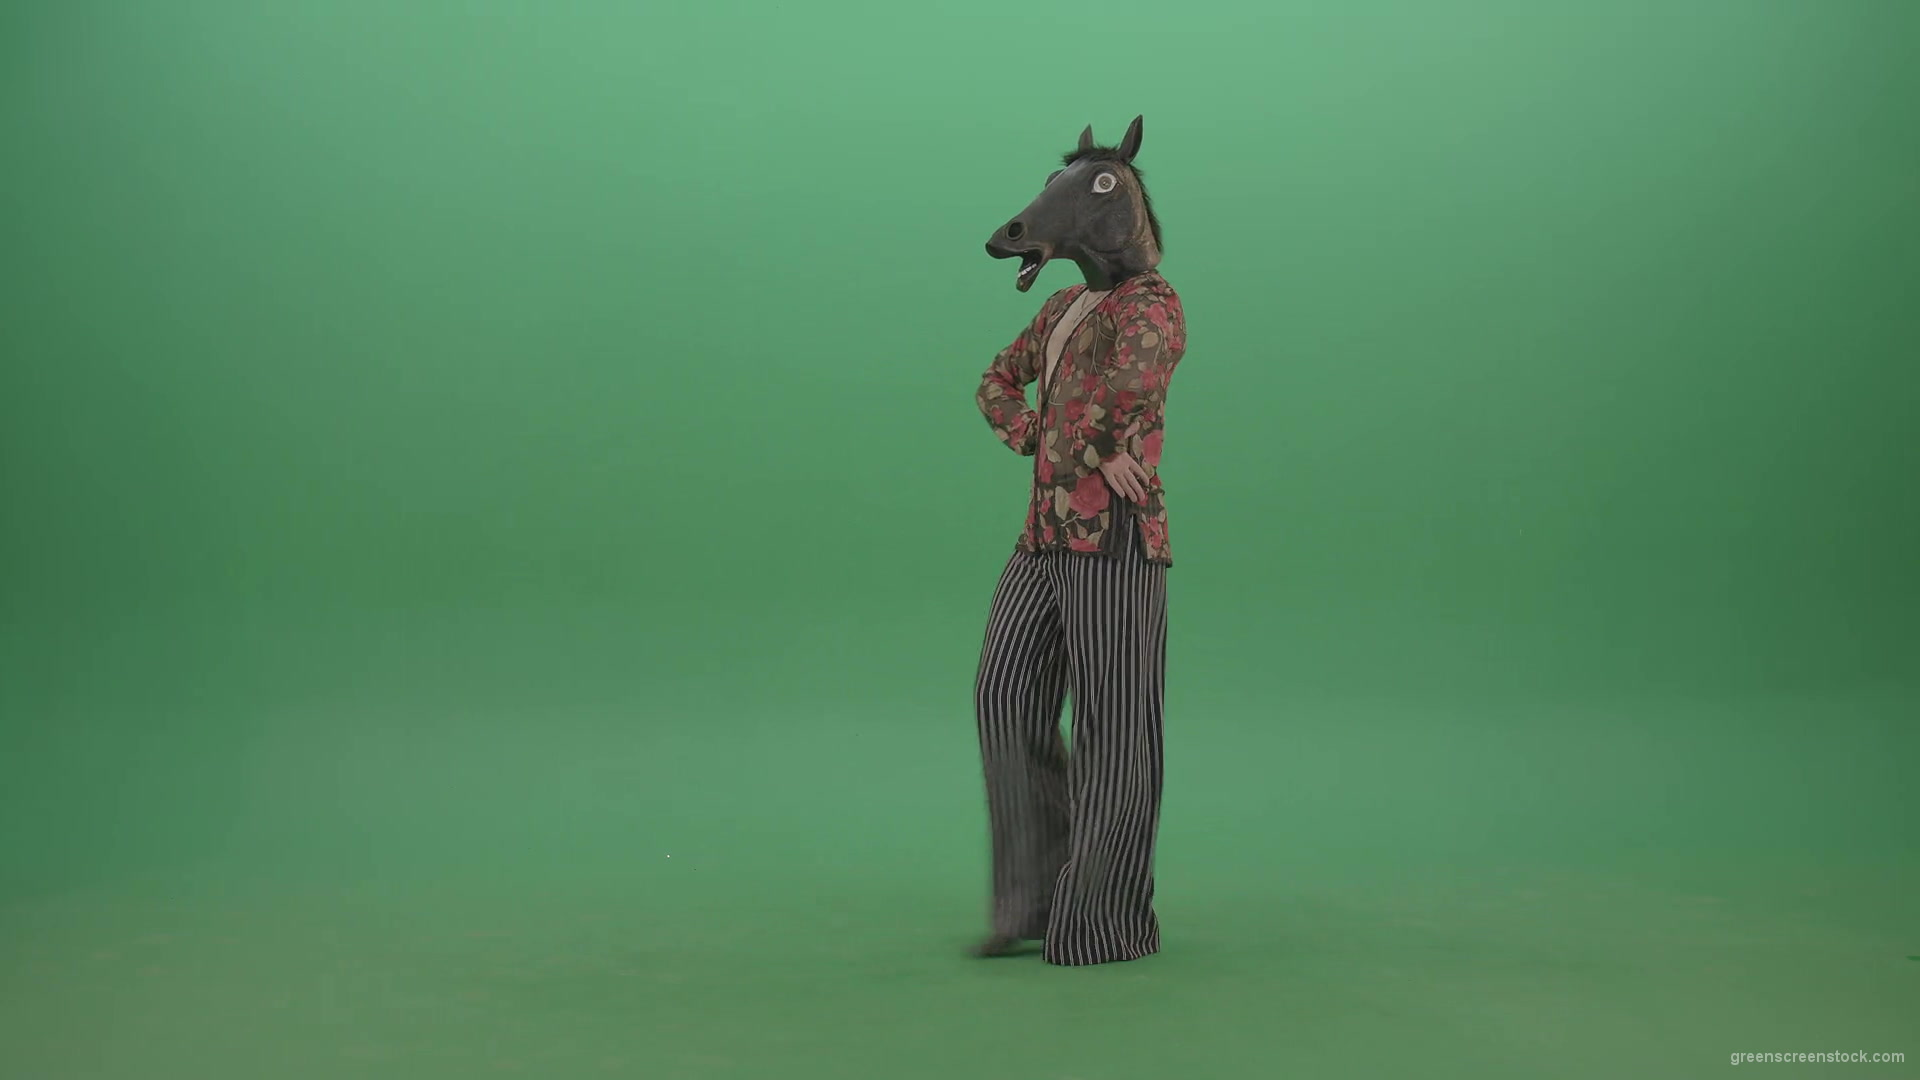 Fanny-dancing-Horse-Man-showing-ballroom-dance-on-green-screen-4K-Video-Footage-1920_008 Green Screen Stock